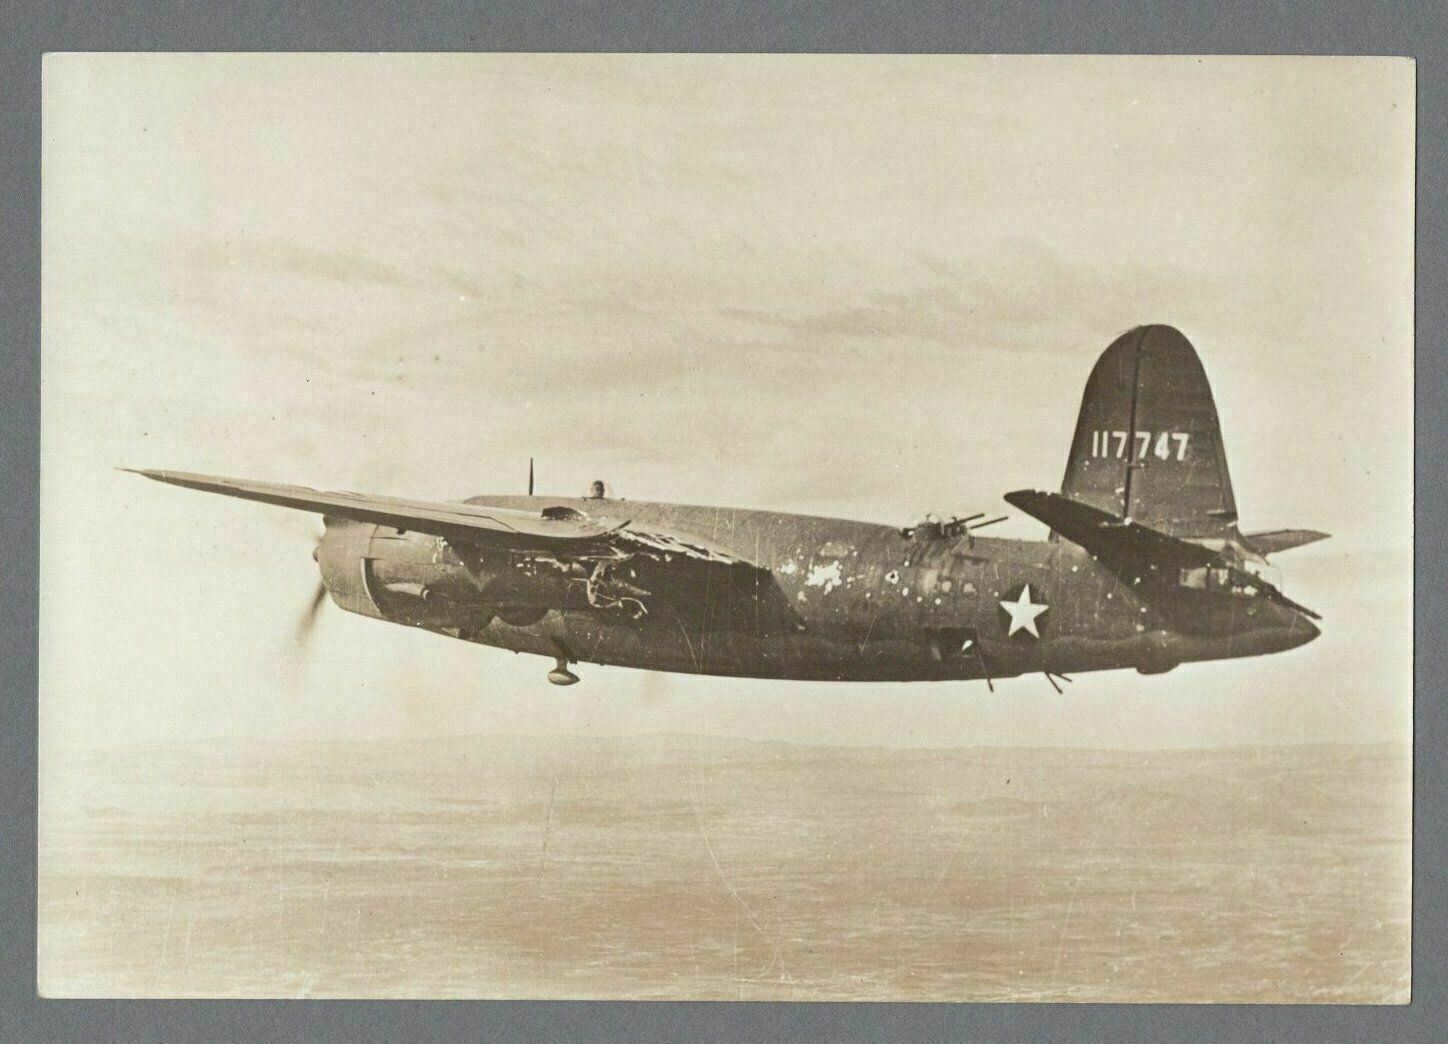 MARTIN B-26 MARAUDER US ARMY FLAK DAMAGE ORIGINAL VINTAGE PRESS PHOTO N. AFRICA